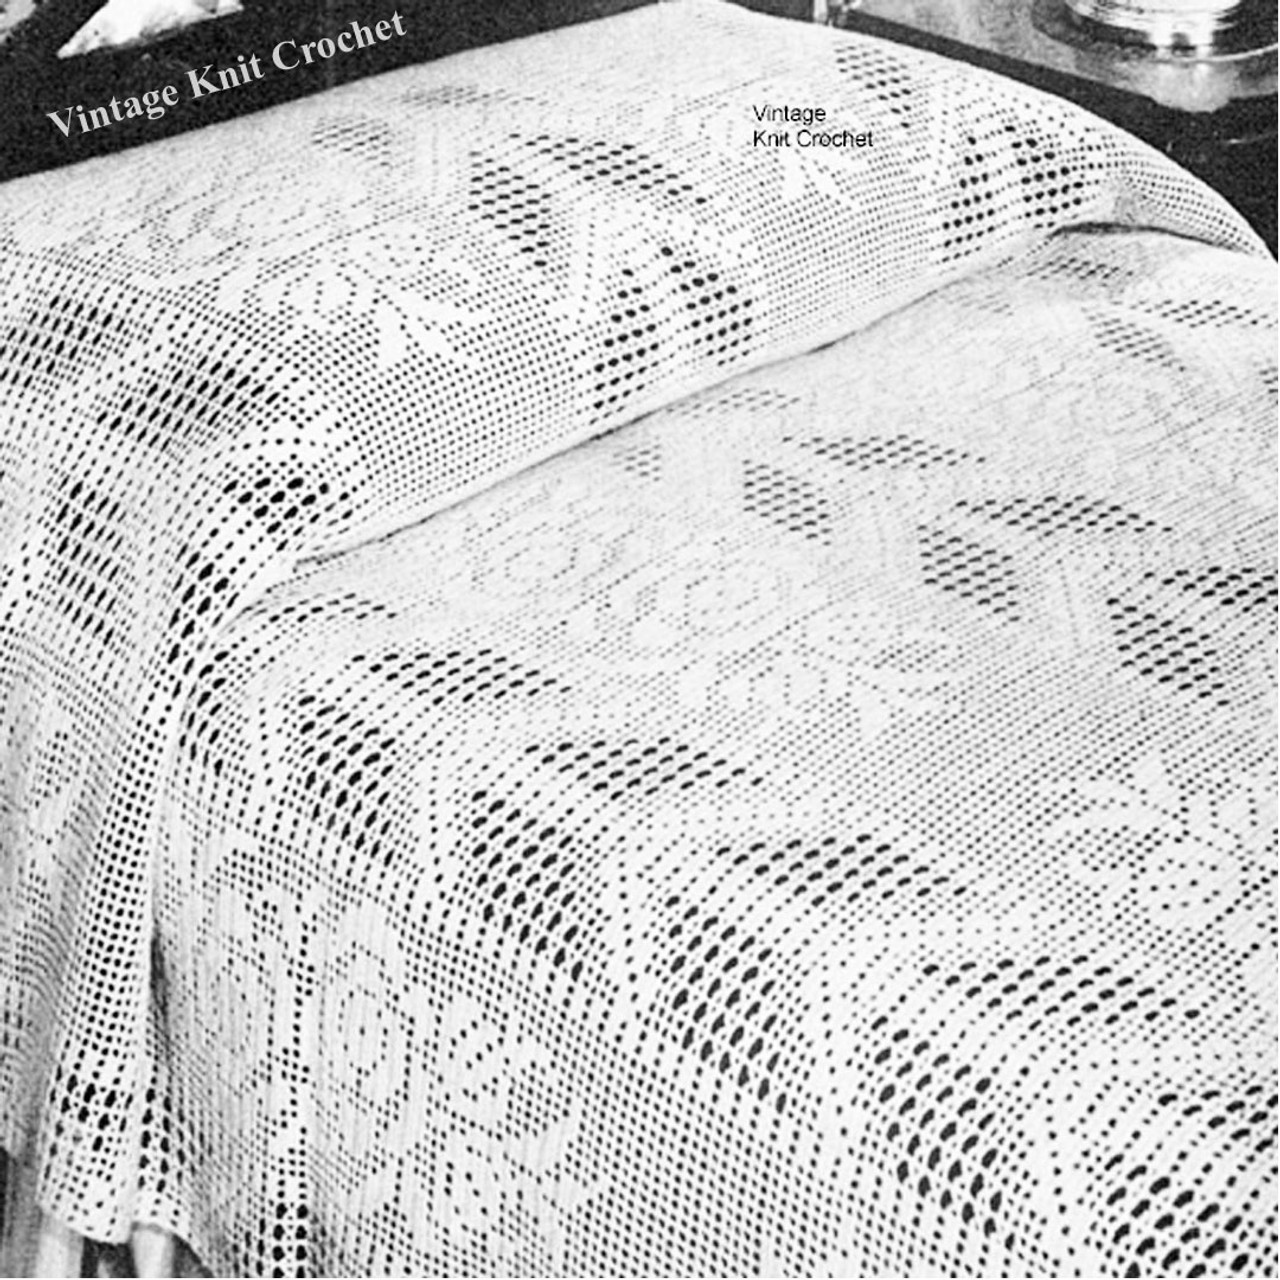 Vintage Filet Crochet Bedspread Pattern, Arrow and Rose